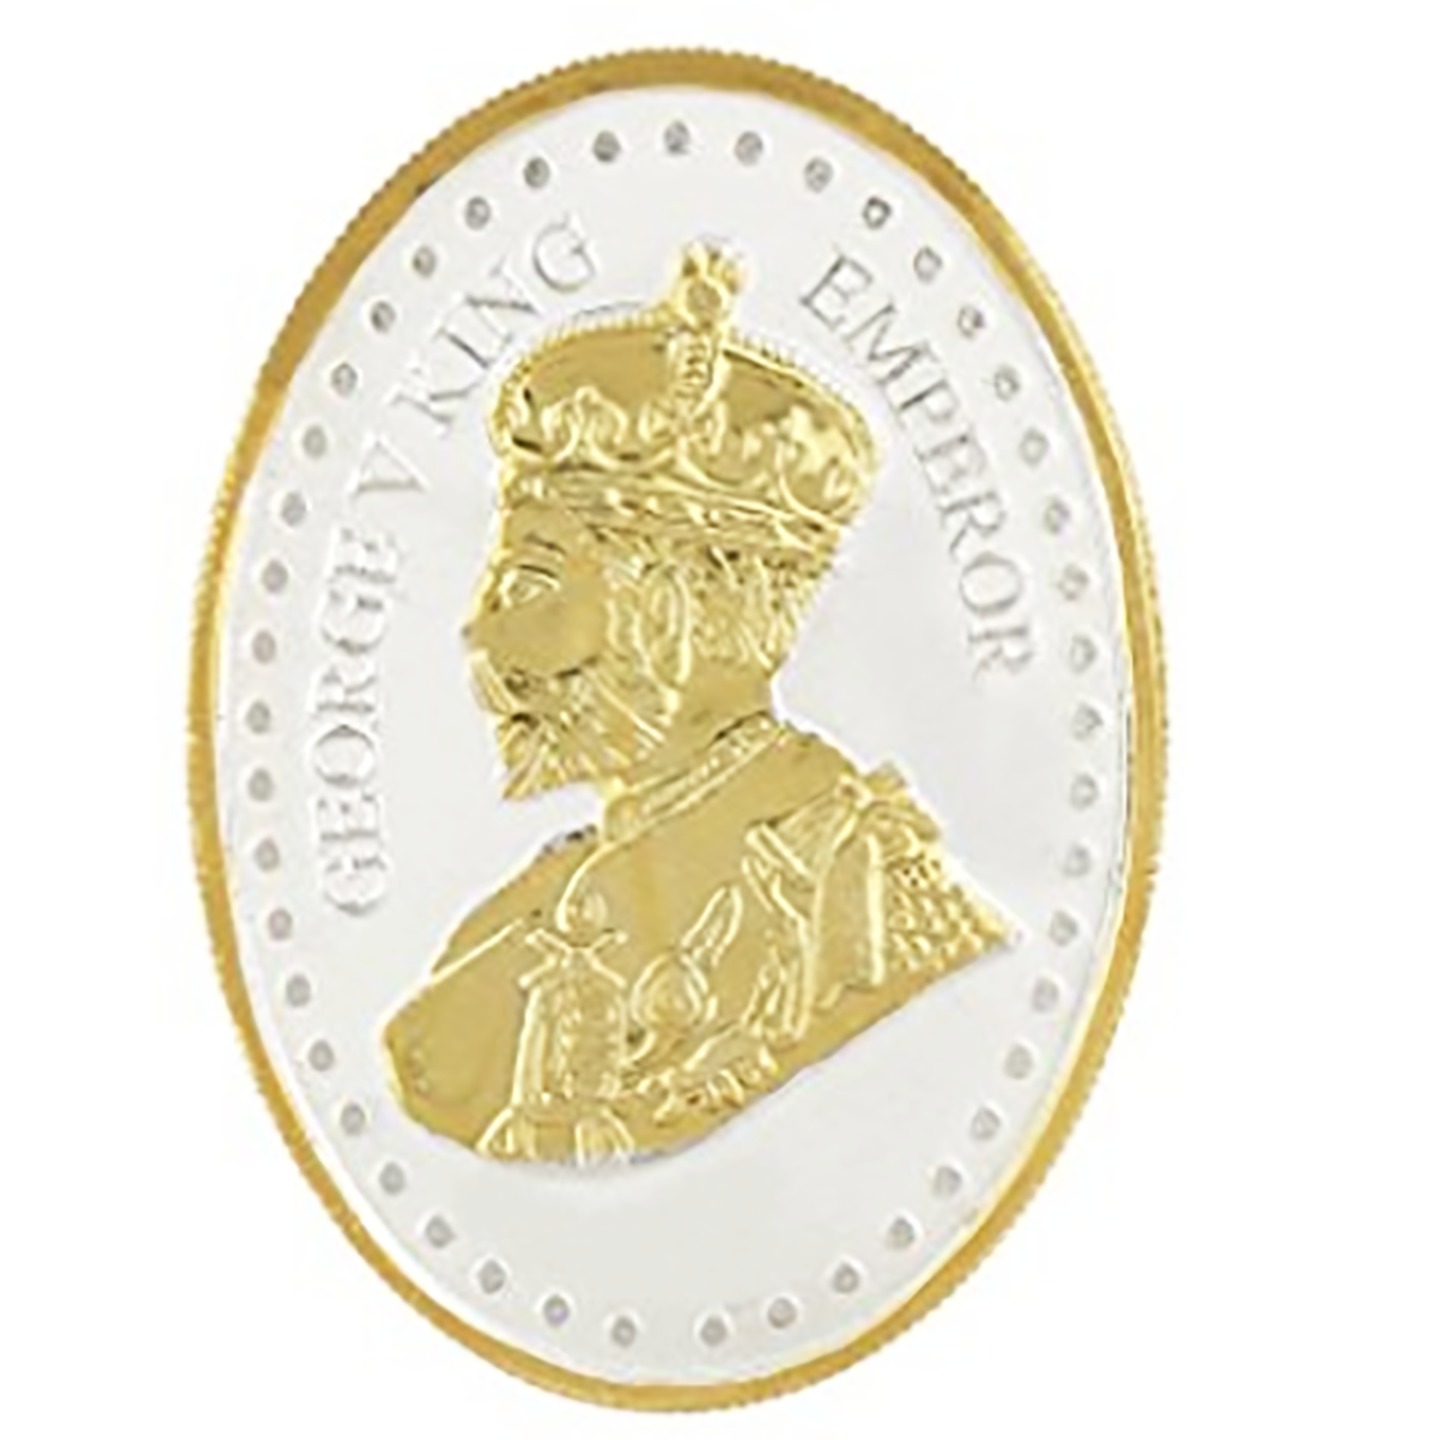 Silver Coin George King V Emperor 24 Kt Gold Plated 10 Gm 999 BIS Hallmarked